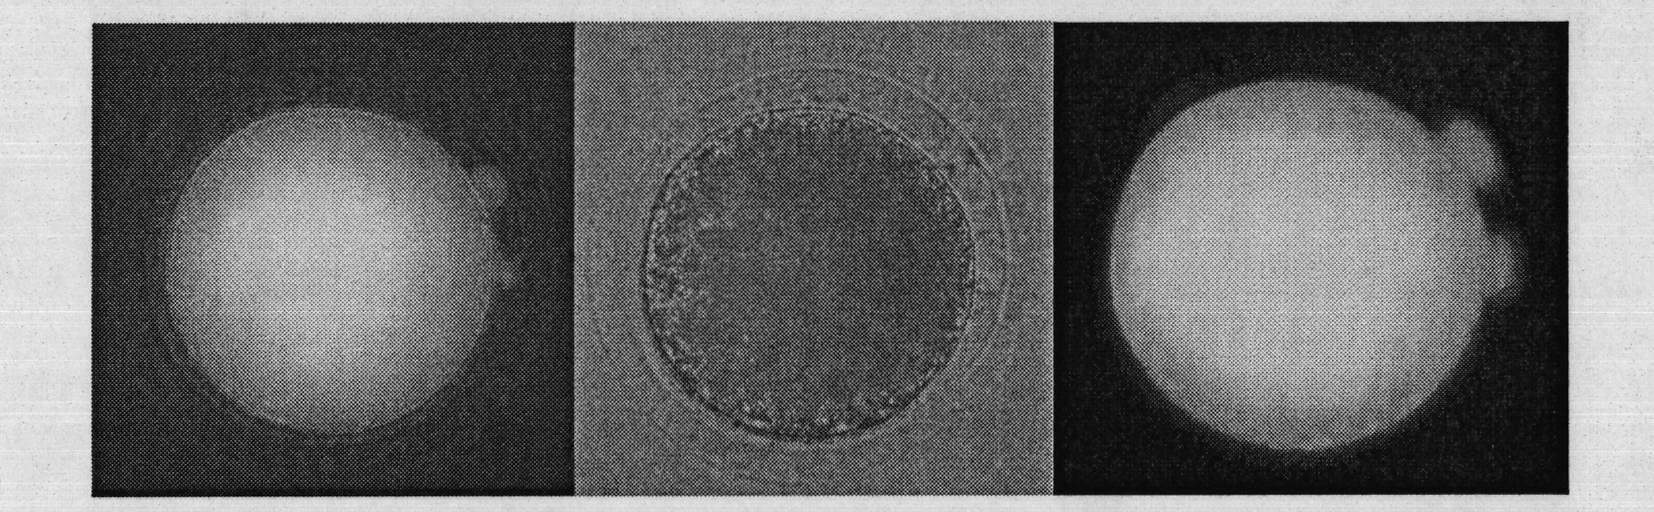 Method for producing transgenic buffalo embryos by applying intracytoplasmic sperm injection (ICSI) mediation